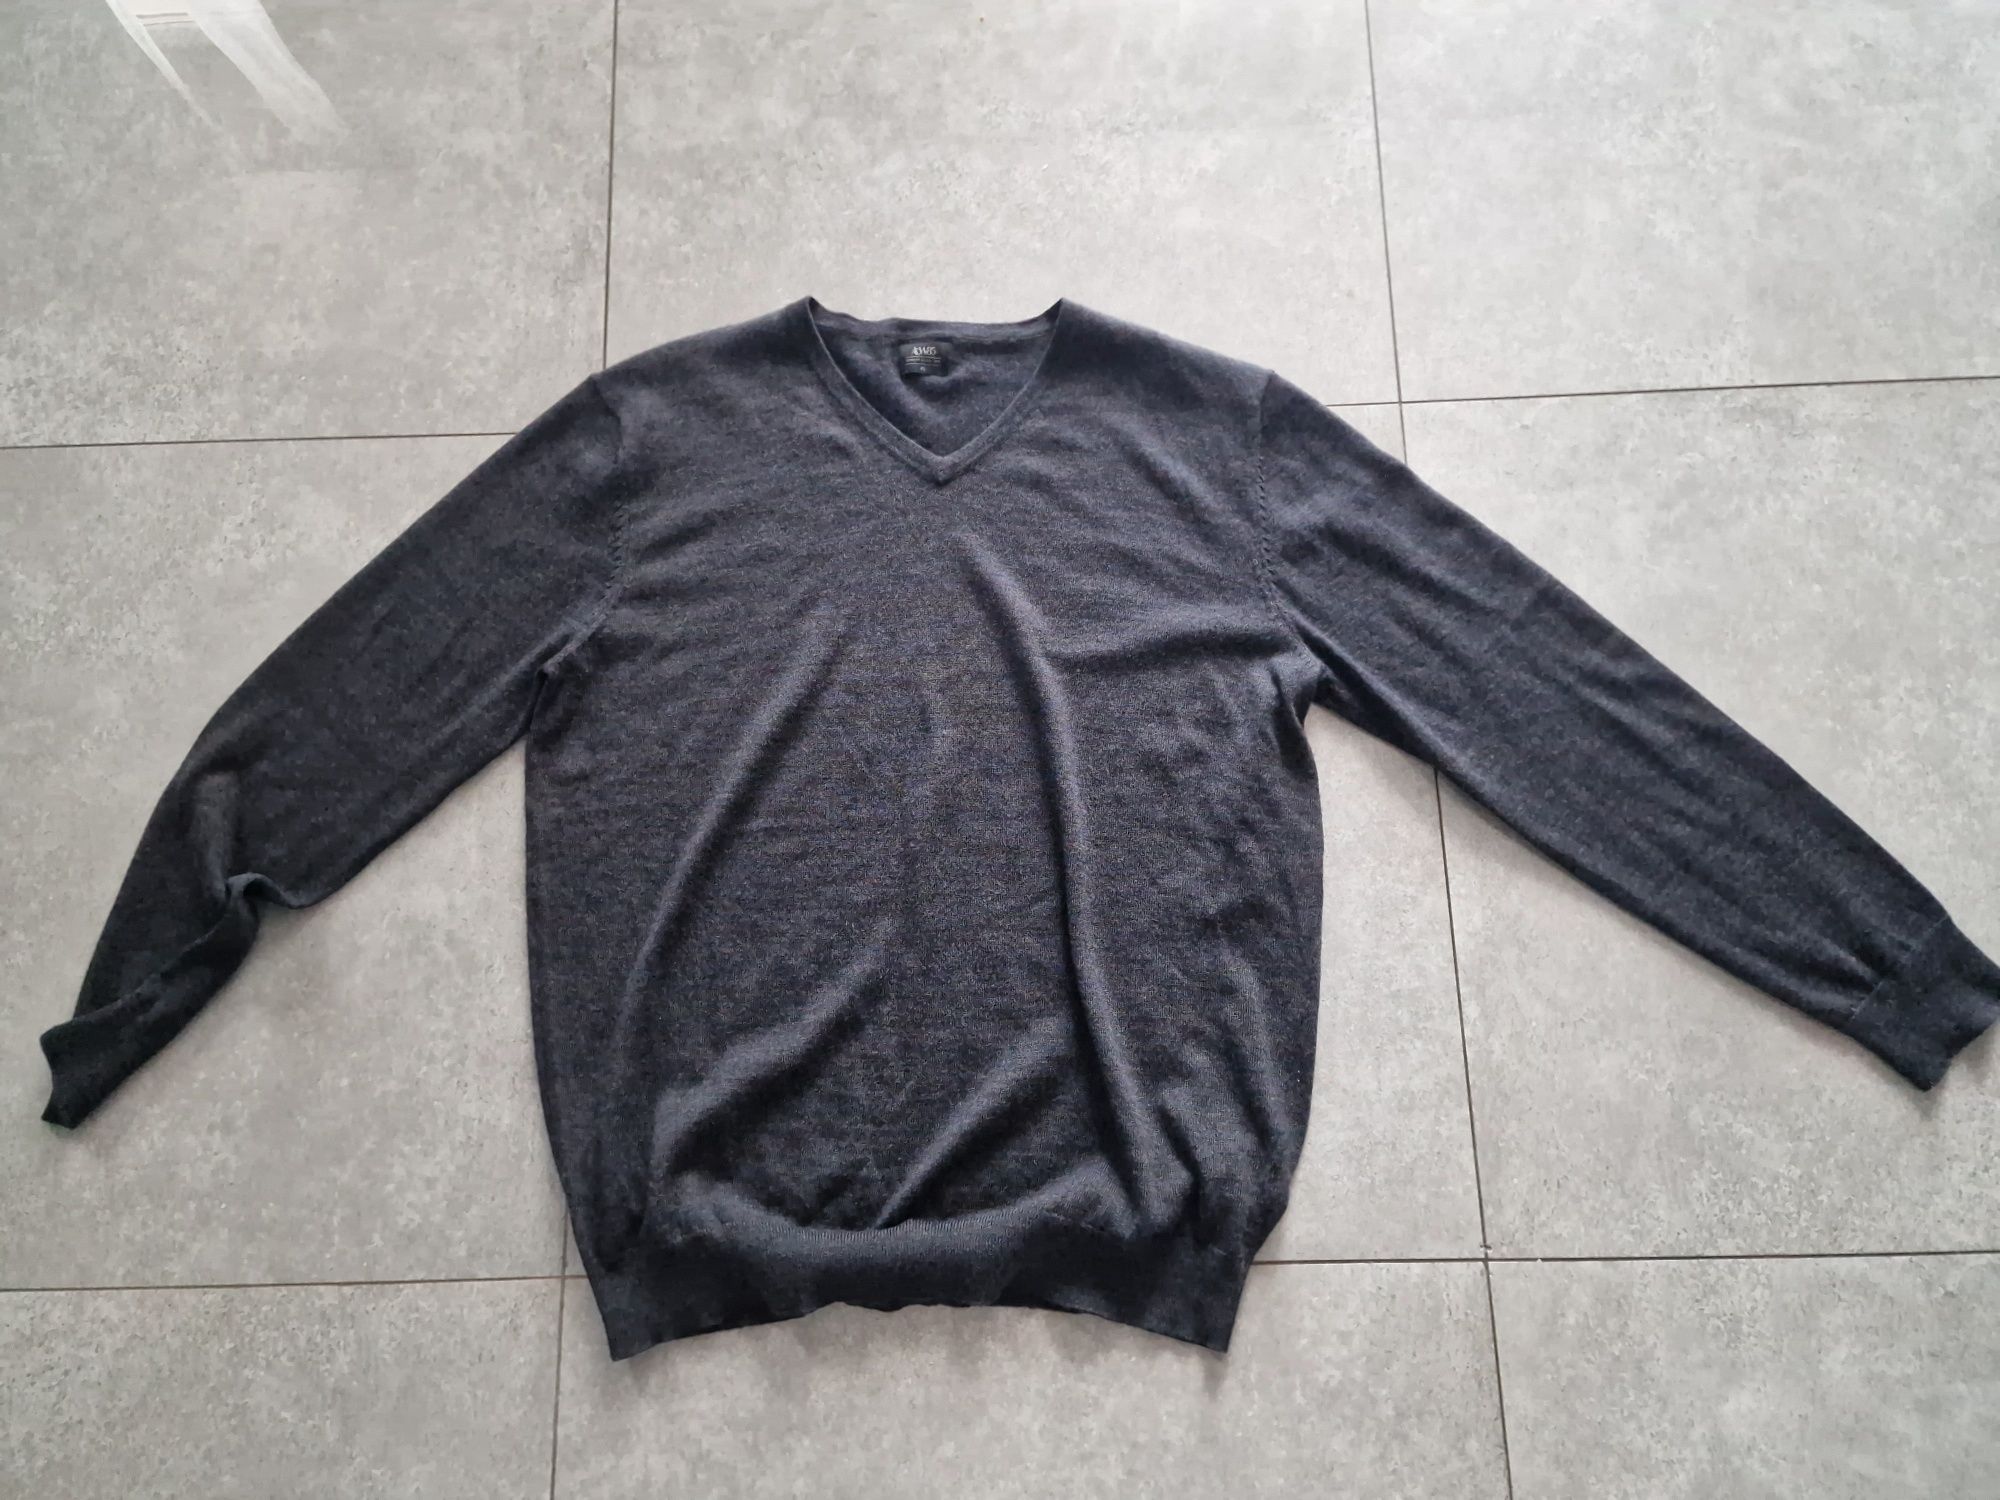 Grafitowy sweter 100% merino wool XL